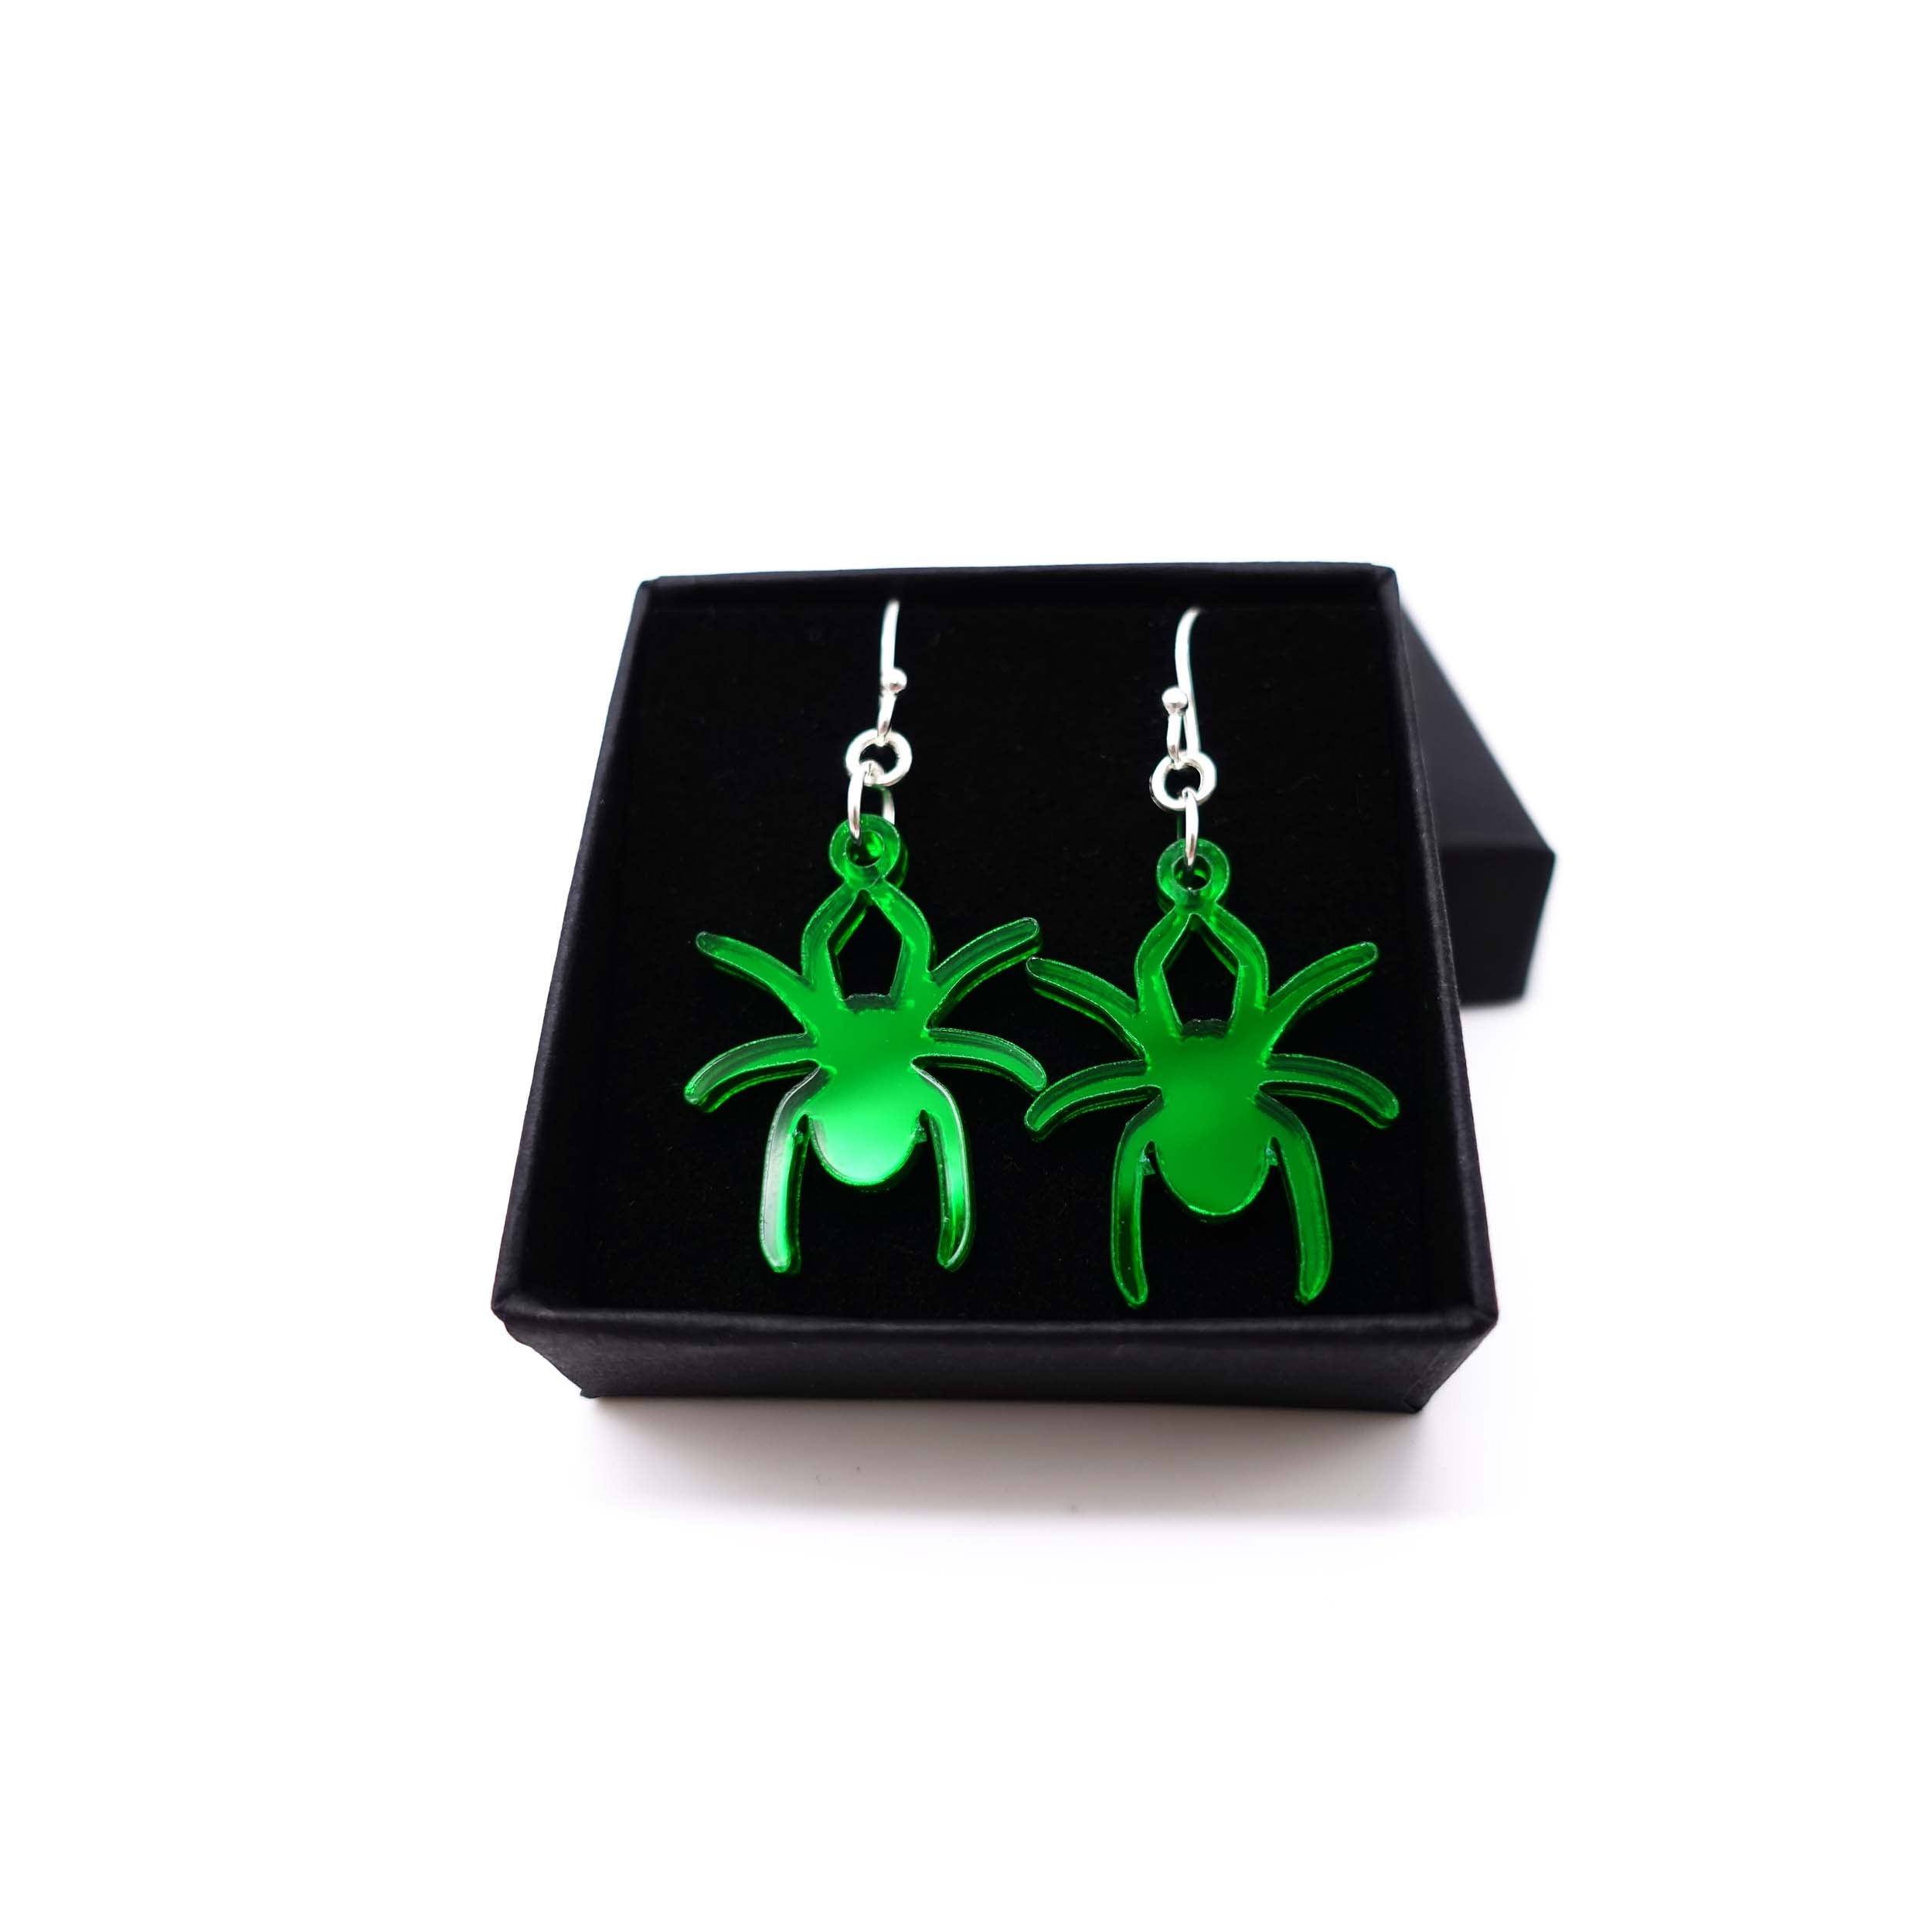 Lady Hale commemorative spider earrings in envy green mirror shown in box.